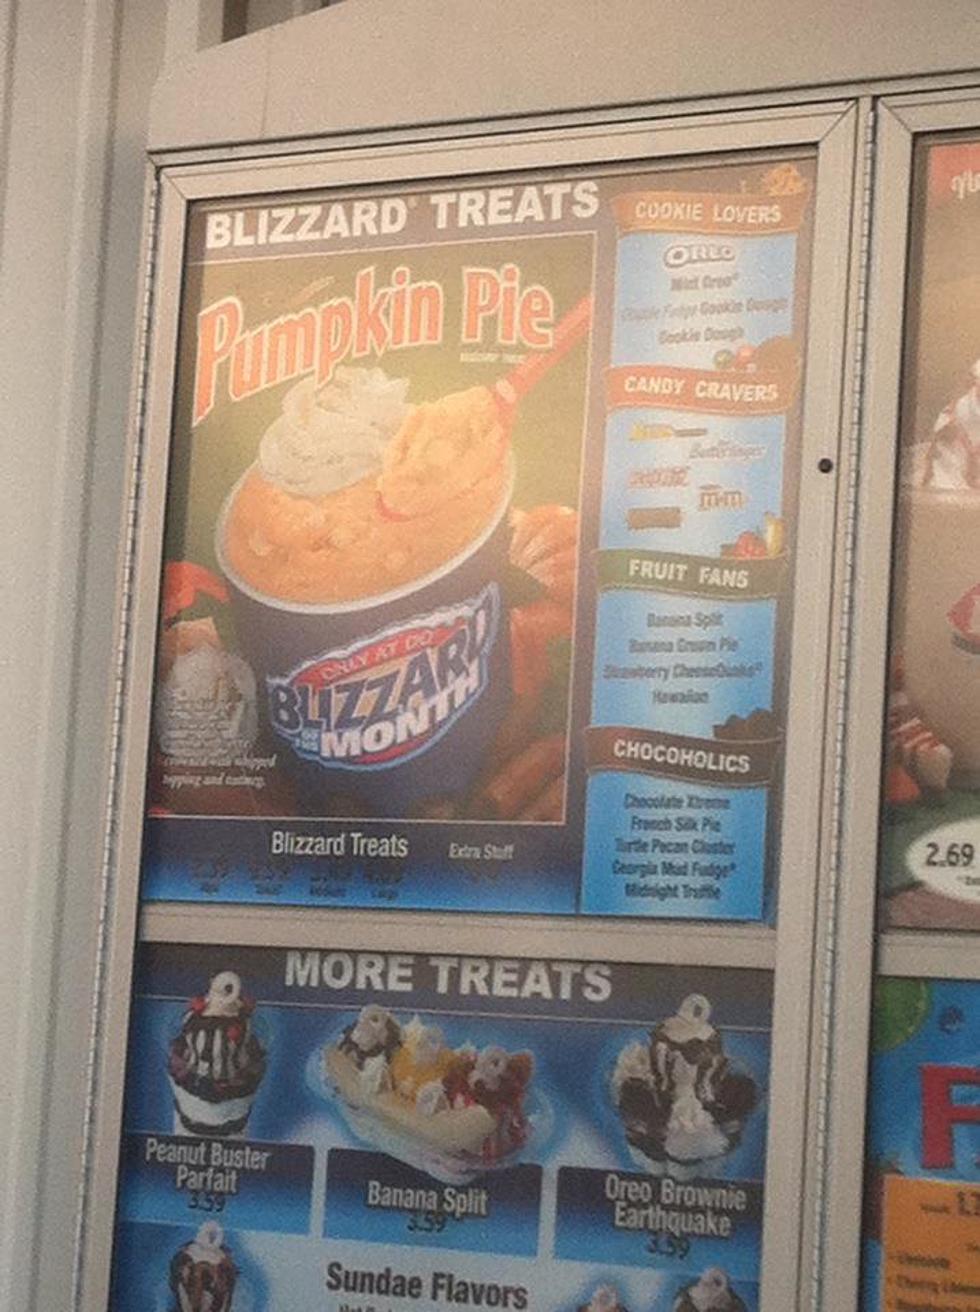 Amarillo Brace Yourself! The Pumpkin Pie Blizzard is Back Soon!